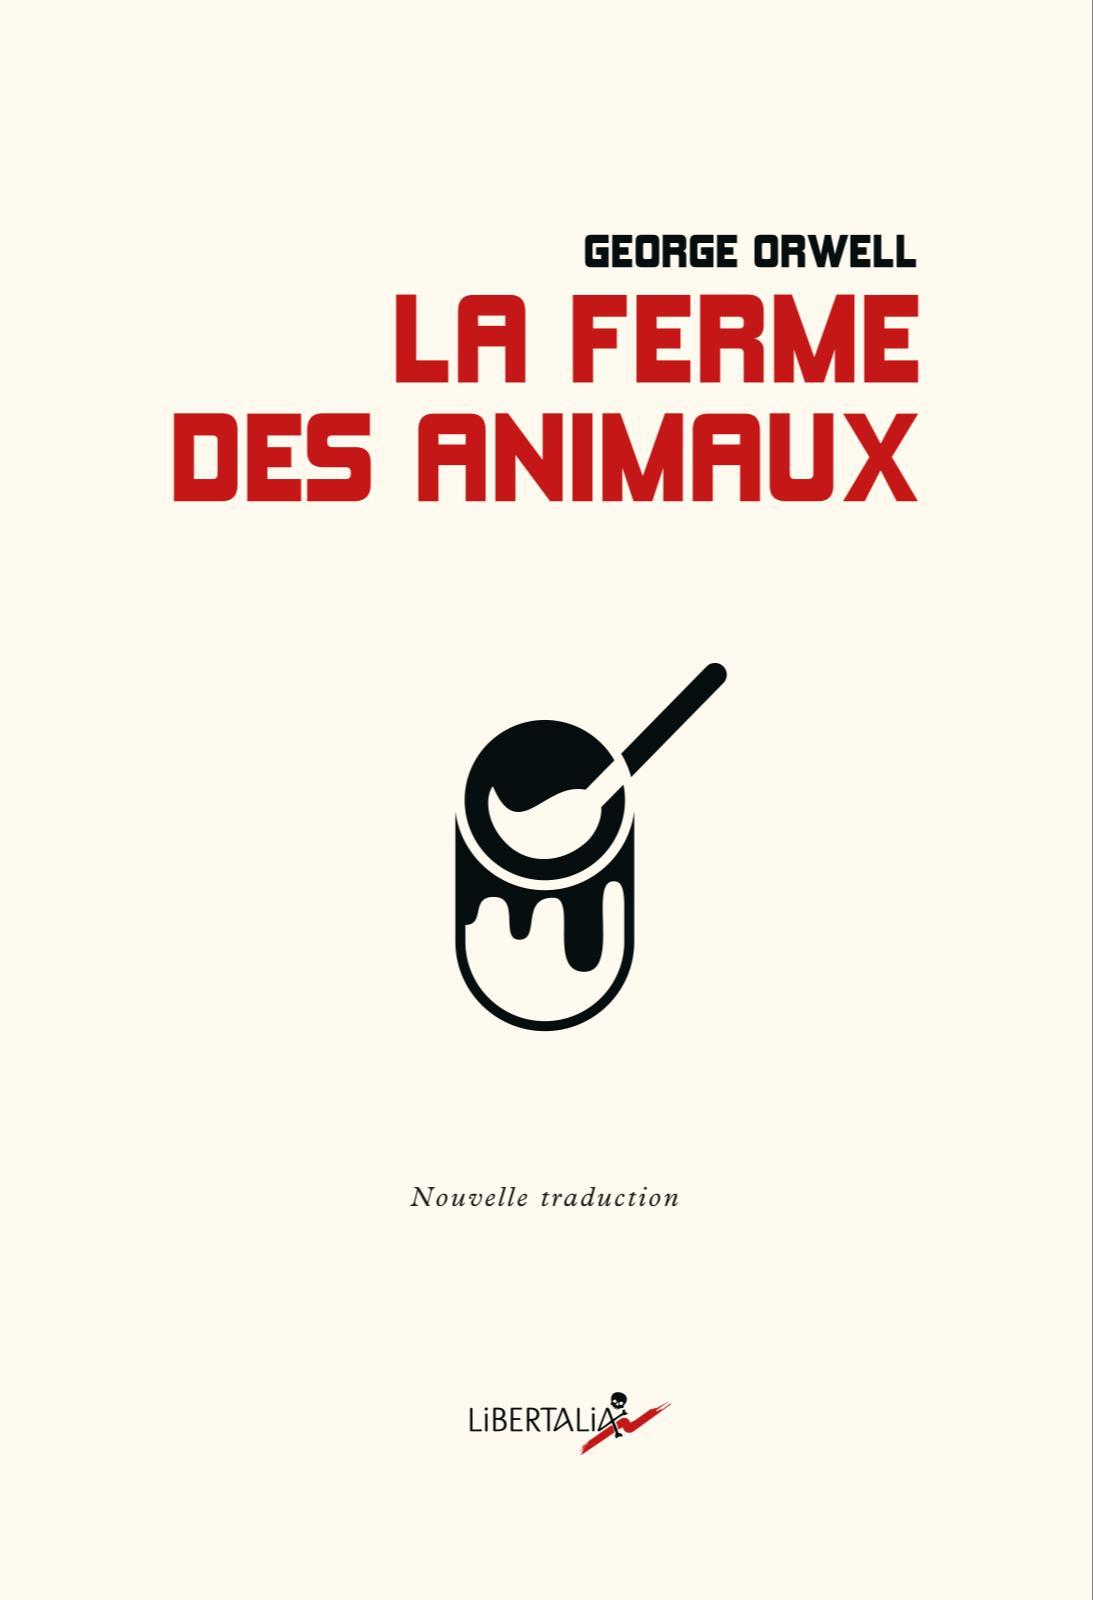 La ferme des animaux (French language, 2021, Libertalia)